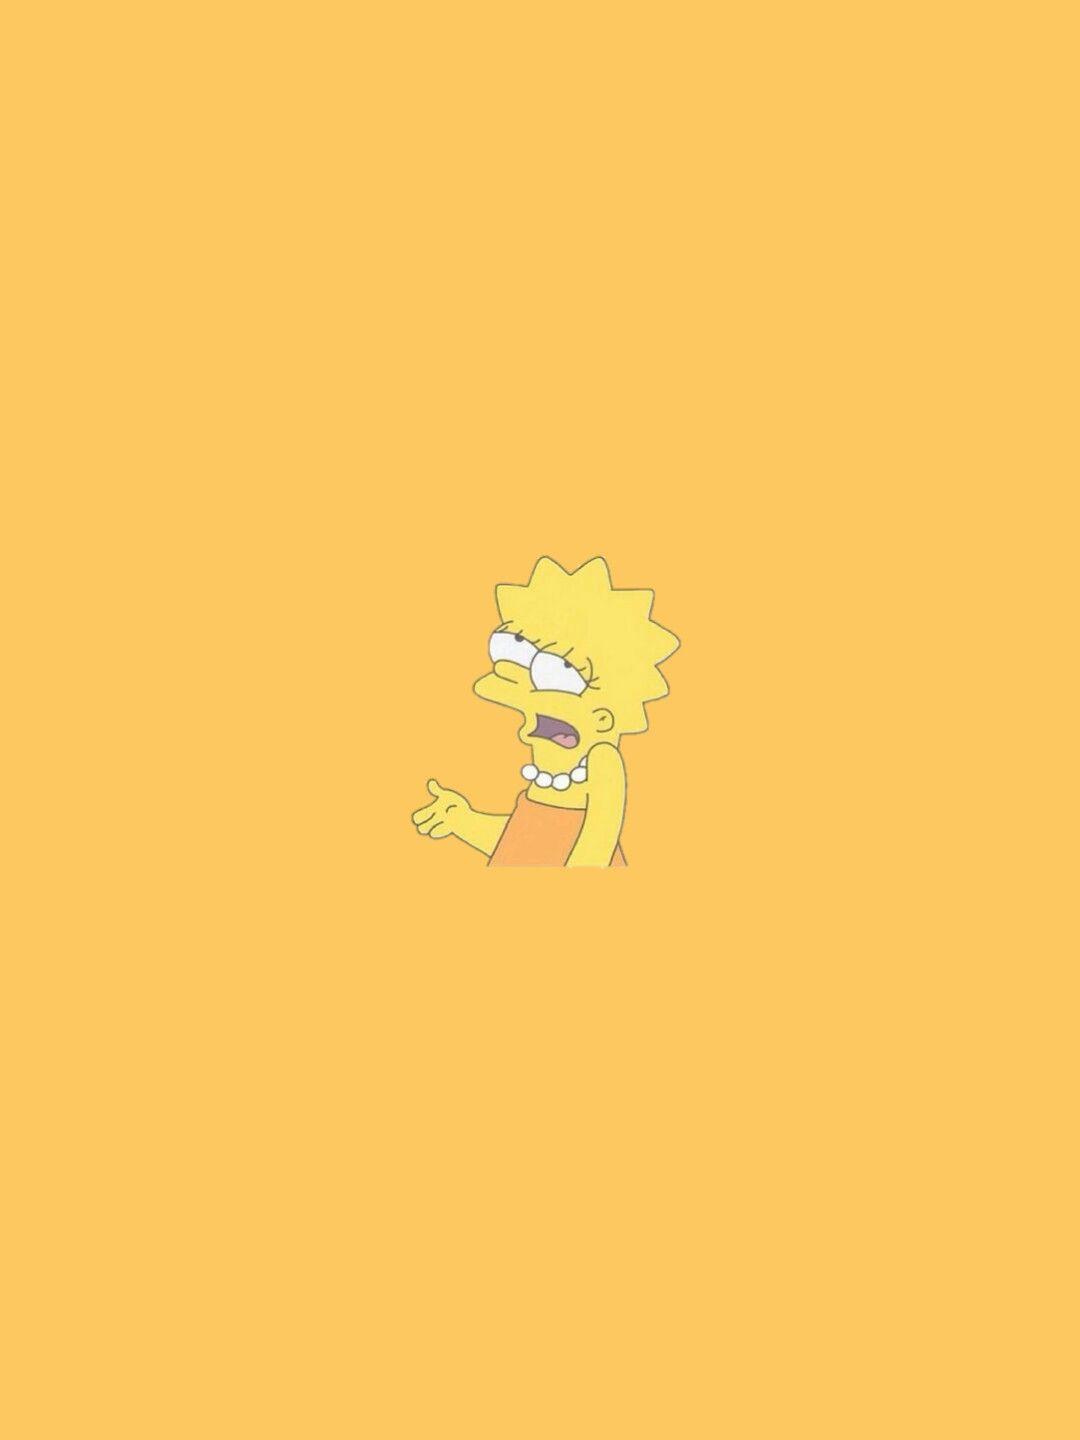 Wallpaper. Simpson wallpaper iphone, Cartoon wallpaper, Emoji